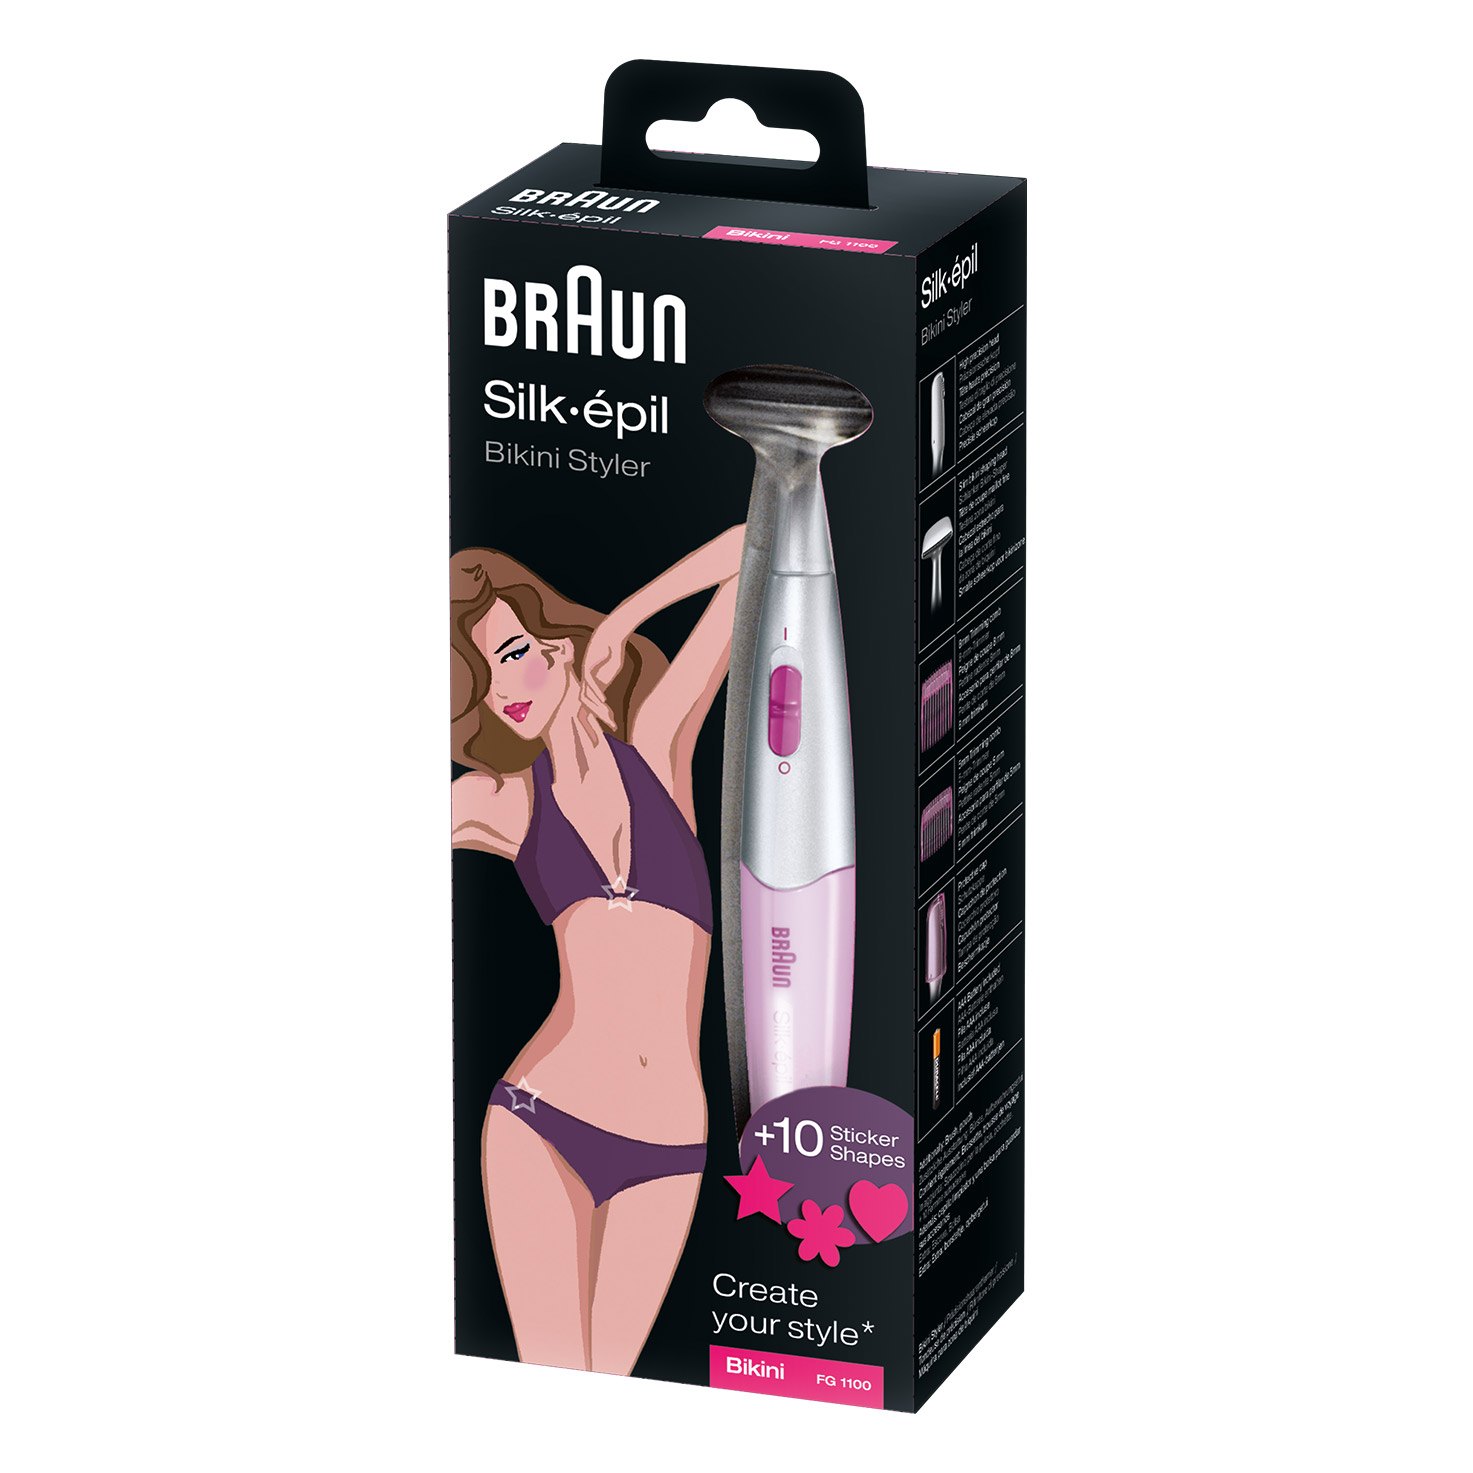 Braun Silk-épil Bikini Styler - FG 1100 pink - packaging